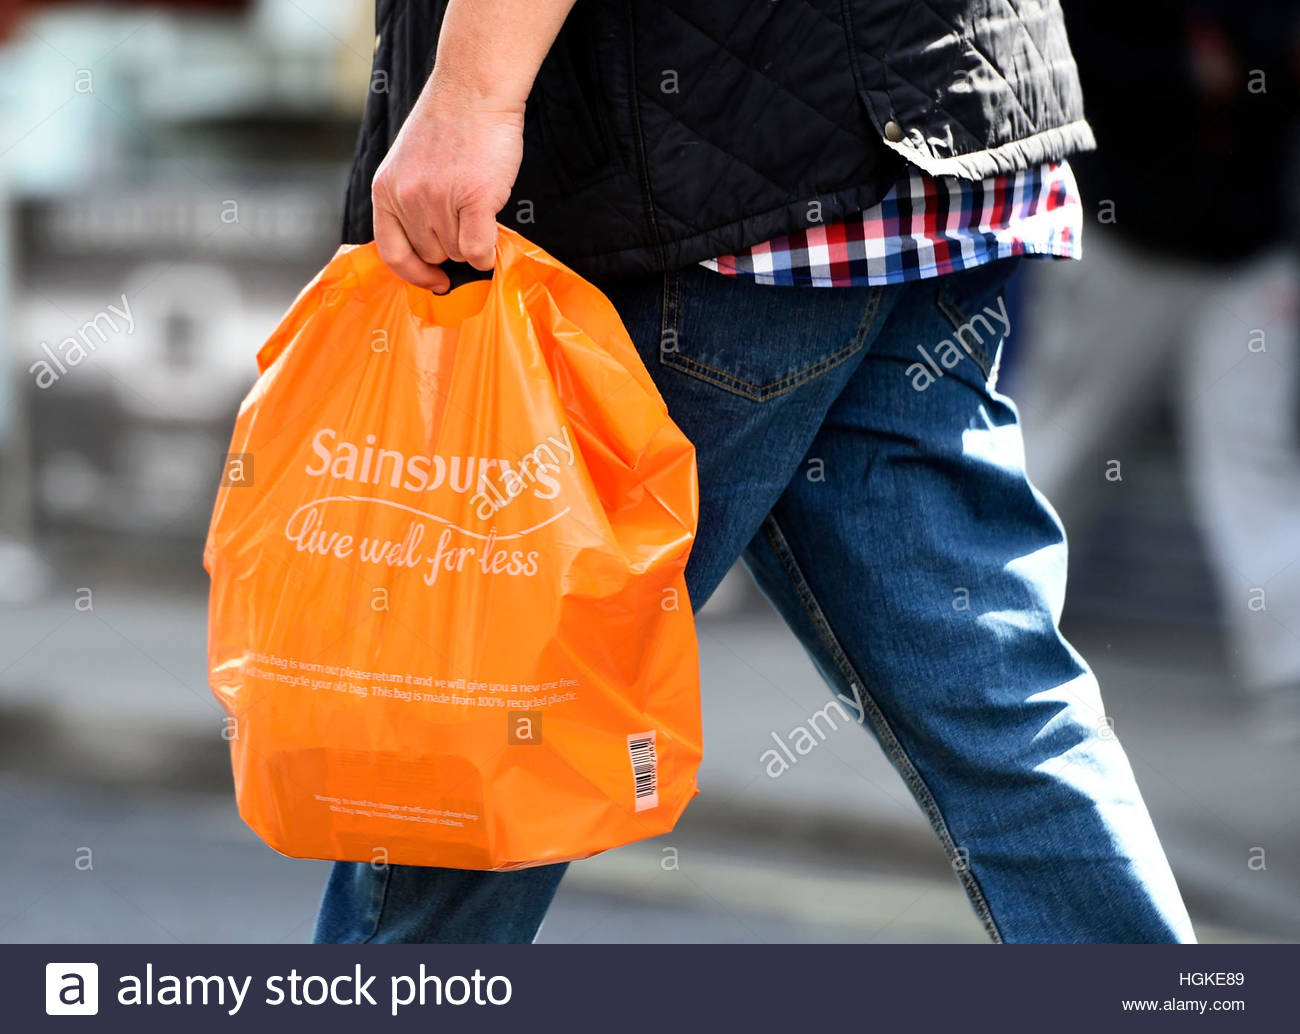 Sainsbury's Bag High Resolution Stock Photography and Images - Alamy